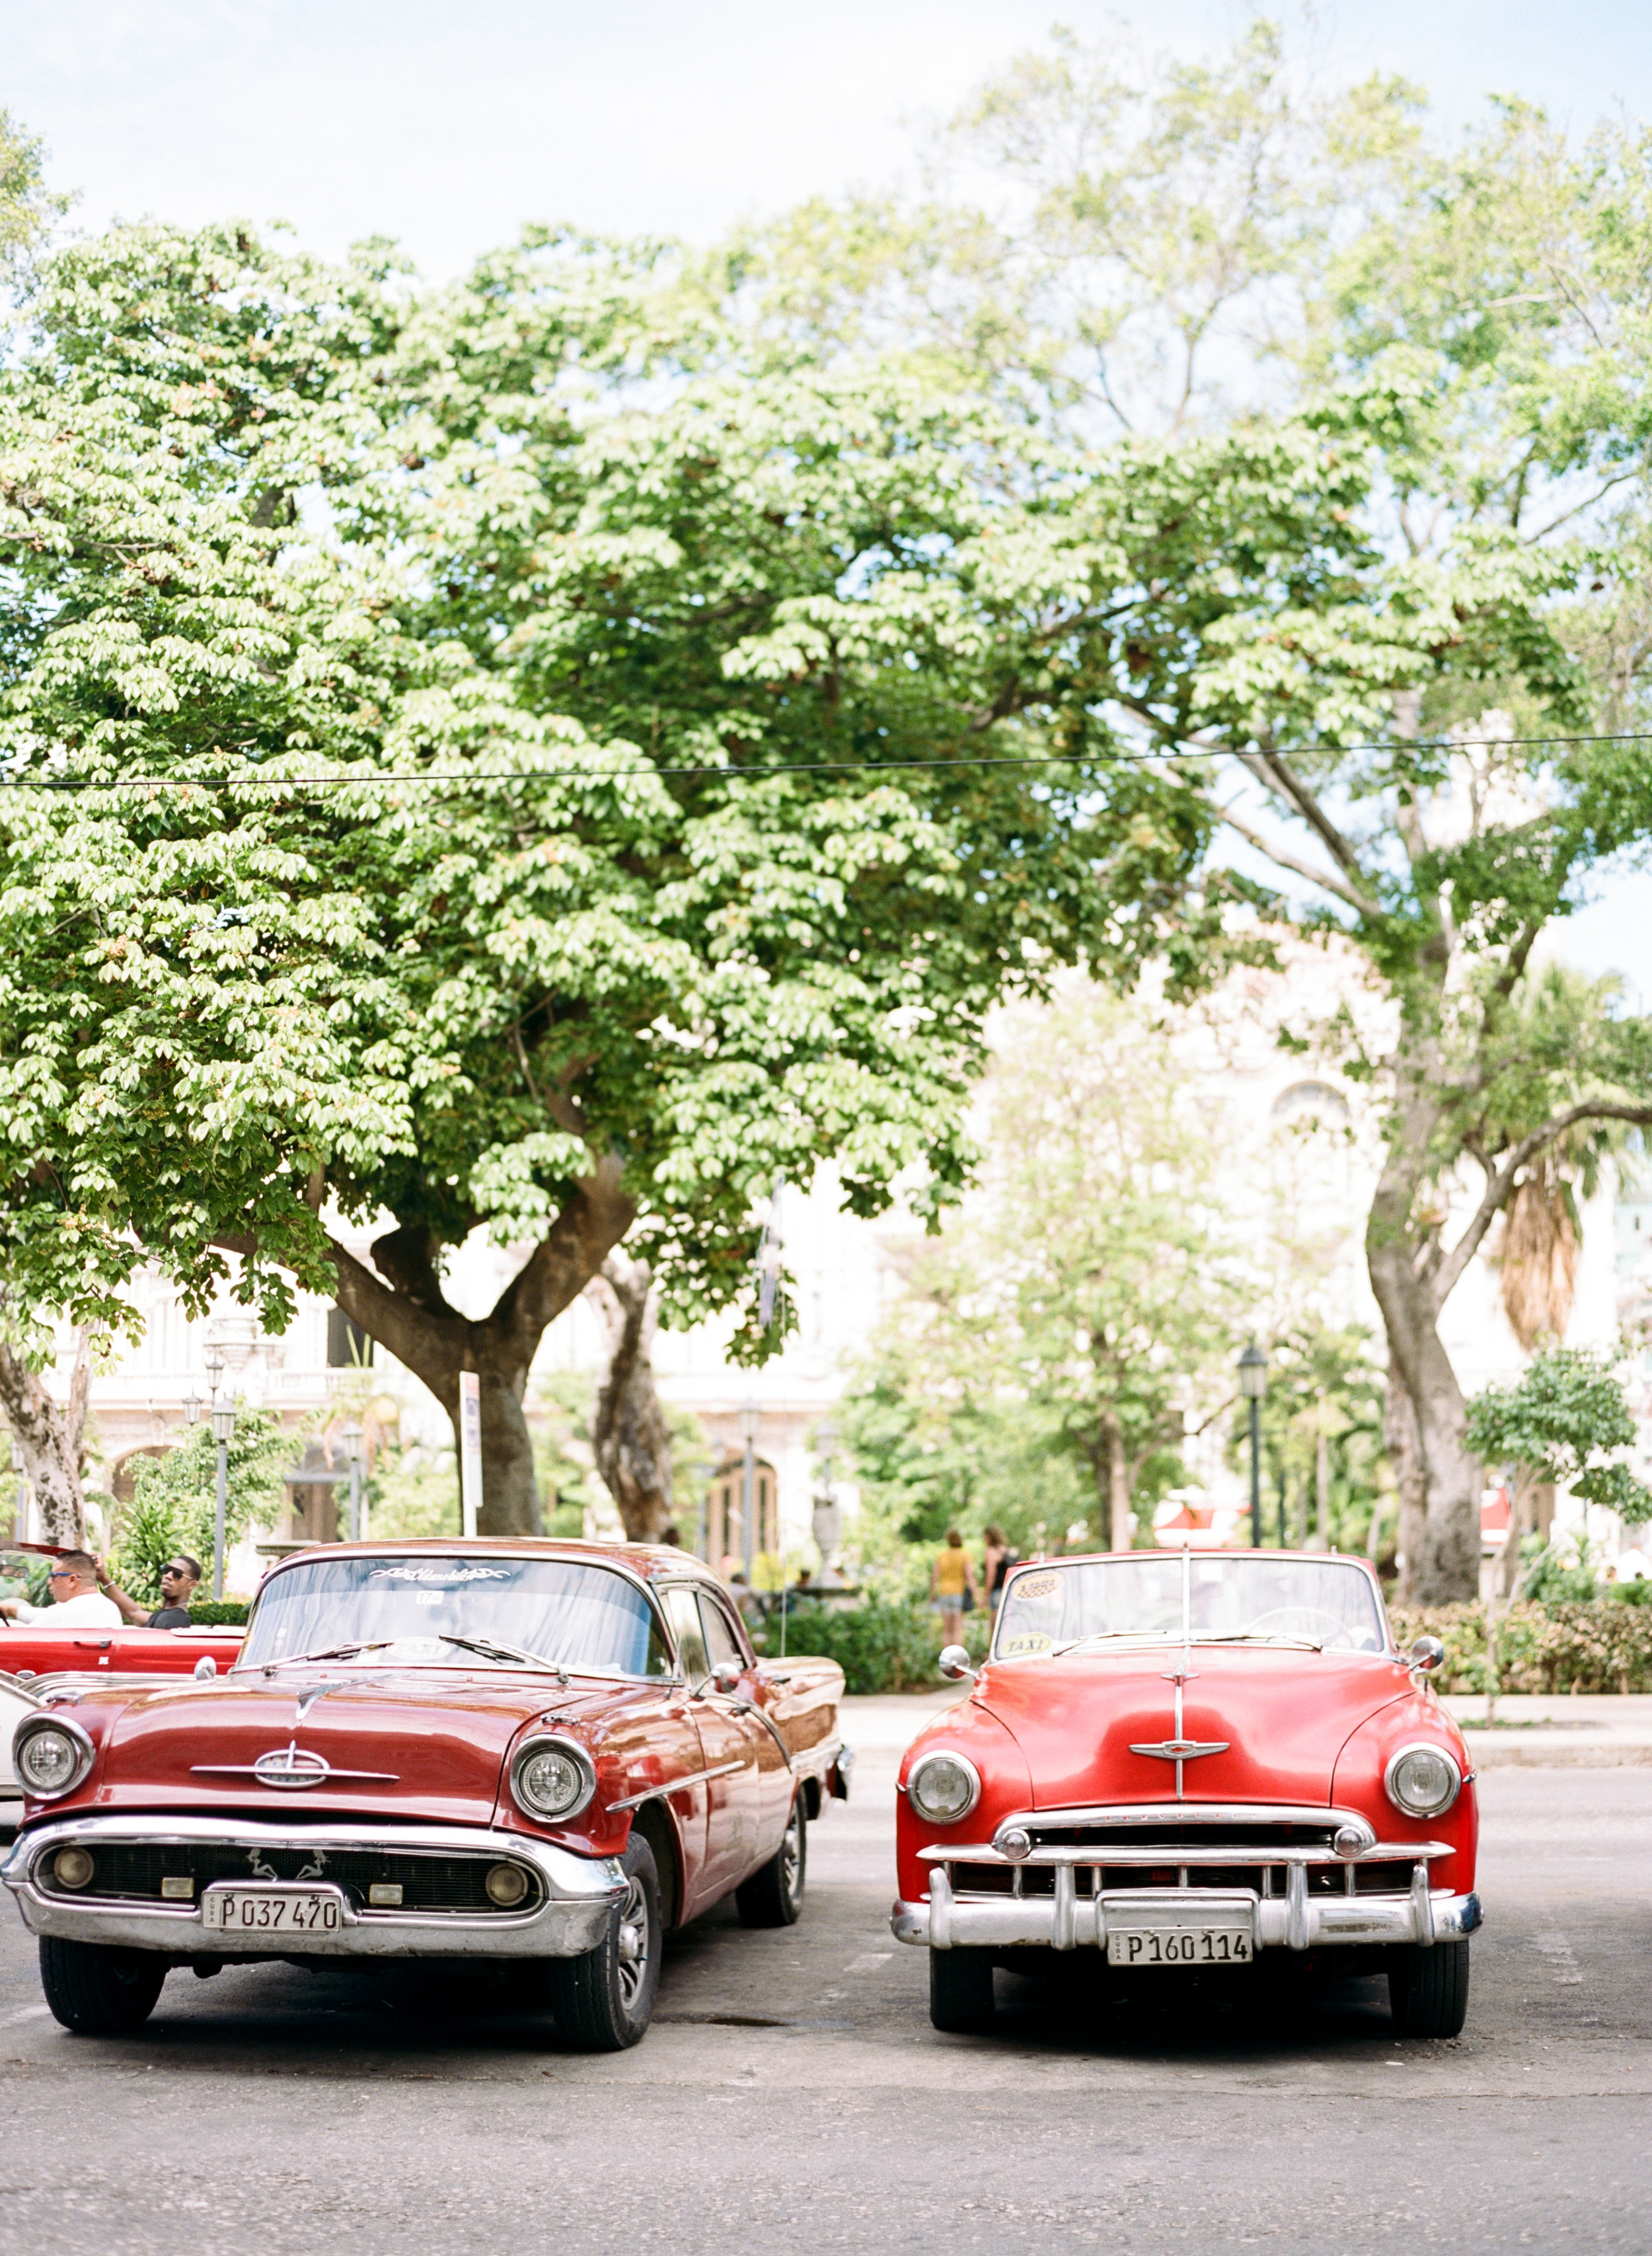 Cuba-Travel-photography-rachael-mcitnosh-photography-16.jpg